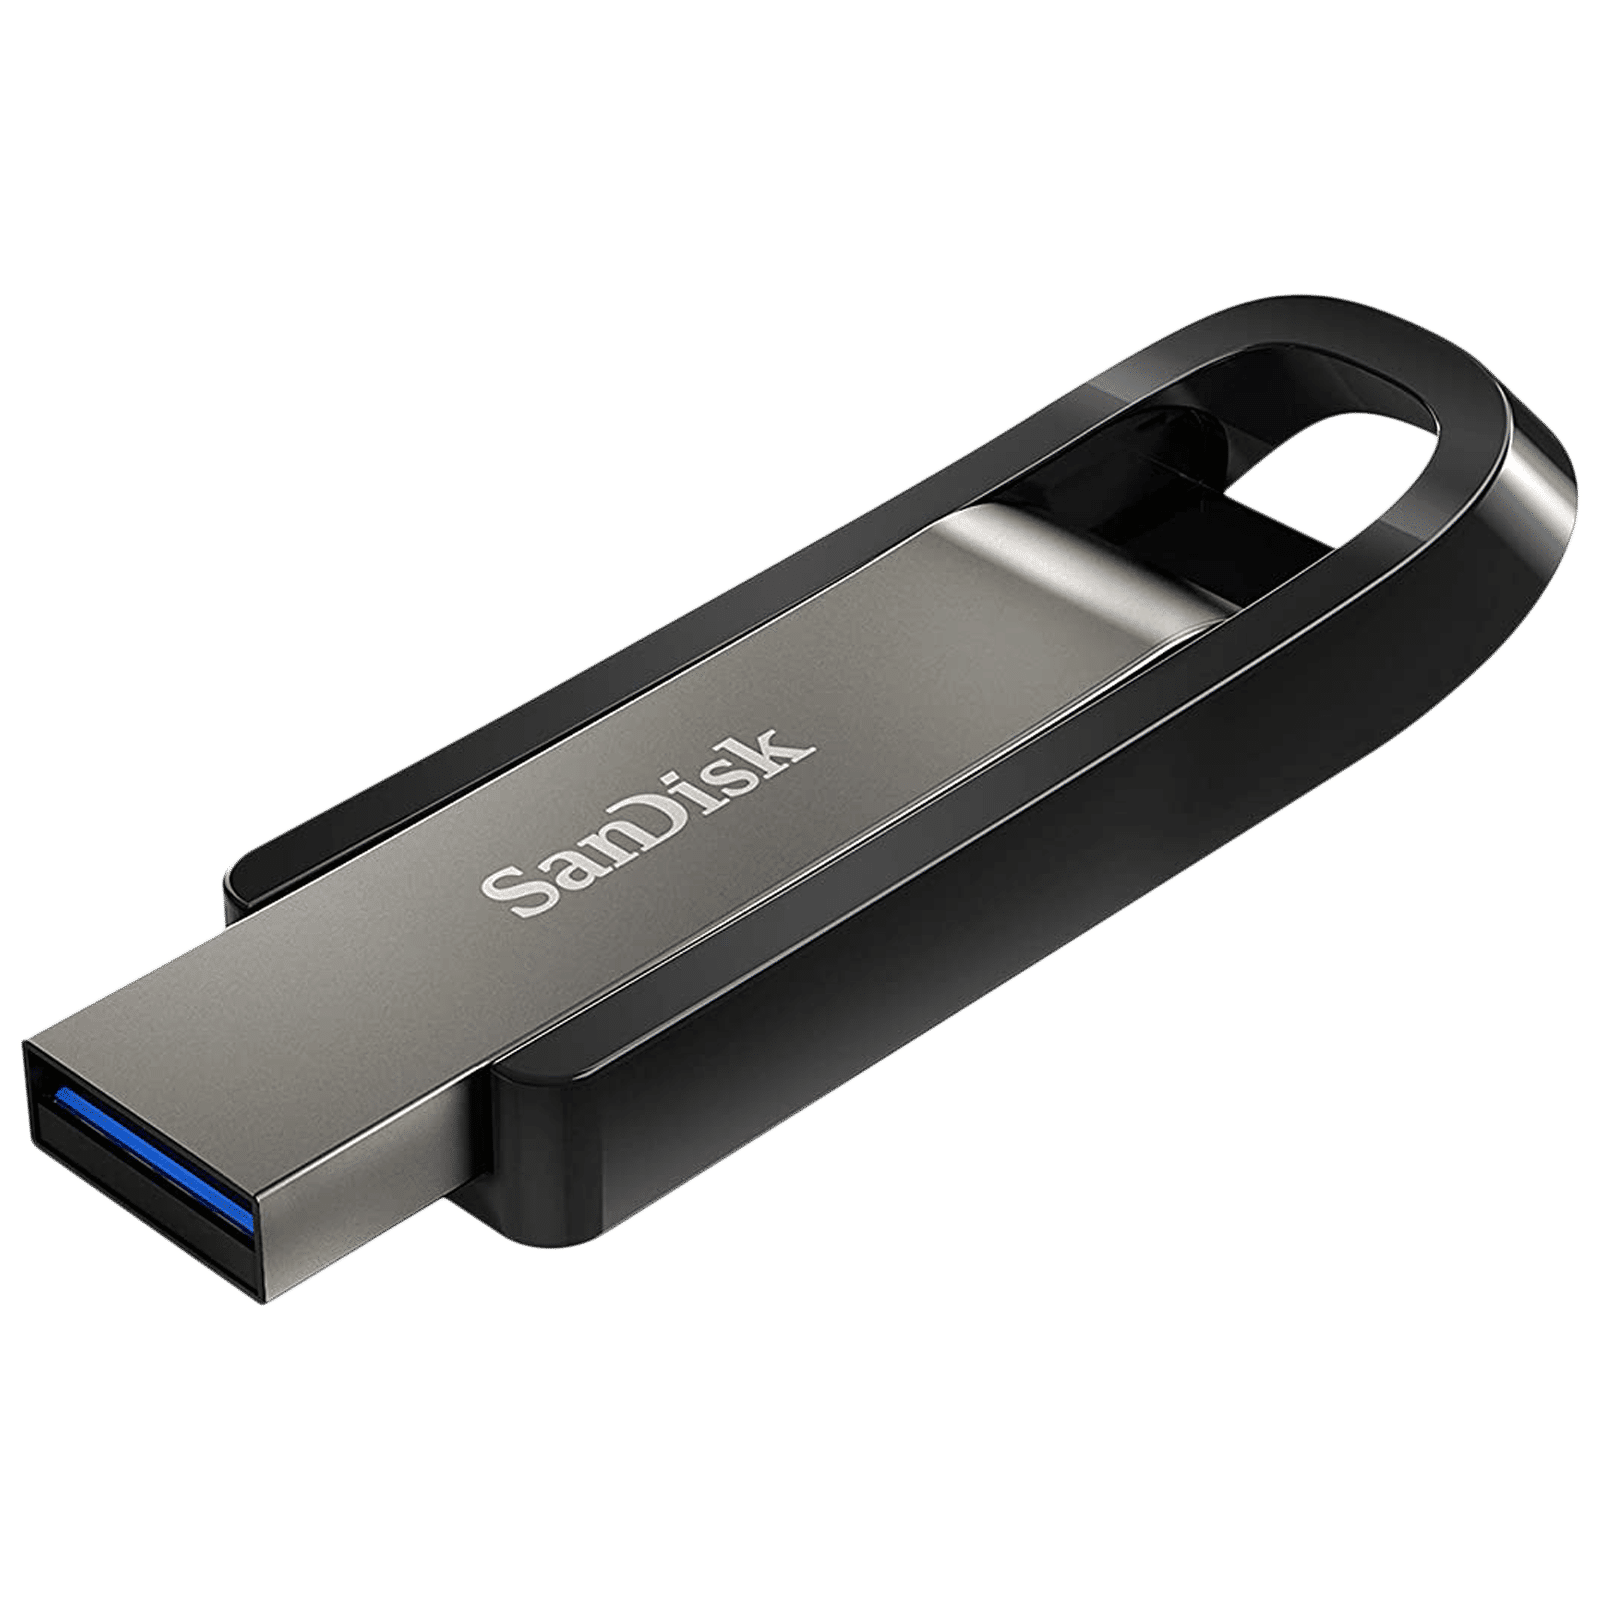 SanDisk 256GB Ultra USB 3.0 Flash Drive - SDCZ48-256G-U46 Black